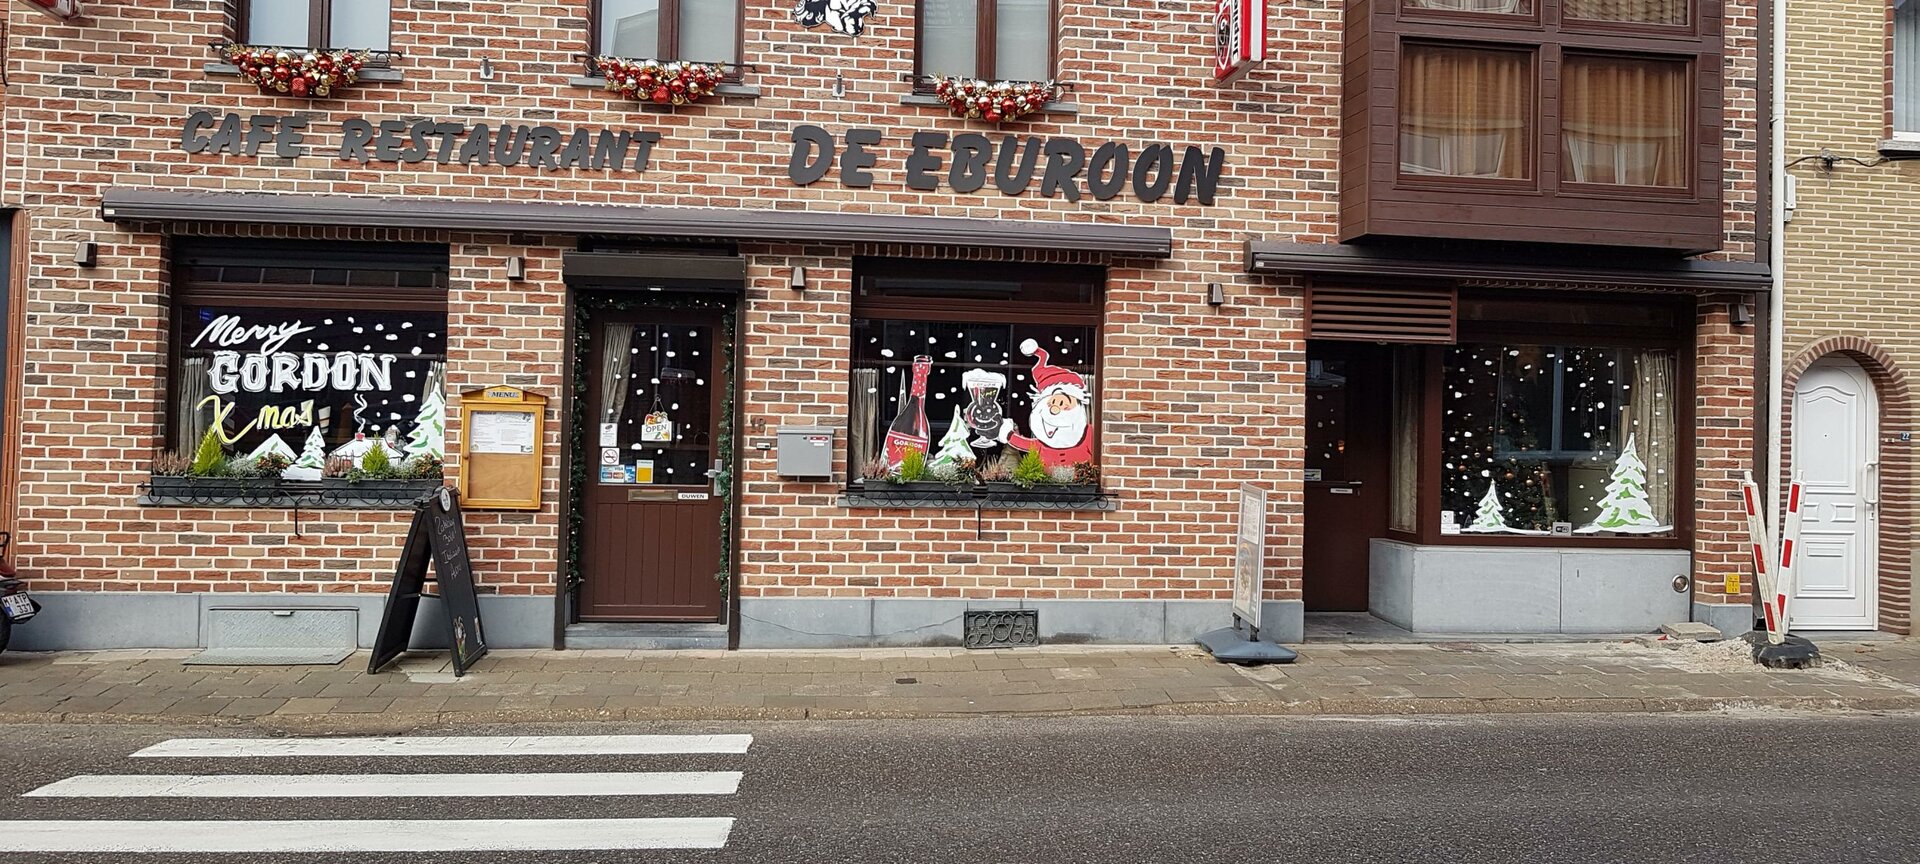 Café Restaurant De Eburoon - Café Restaurant De Eburoon